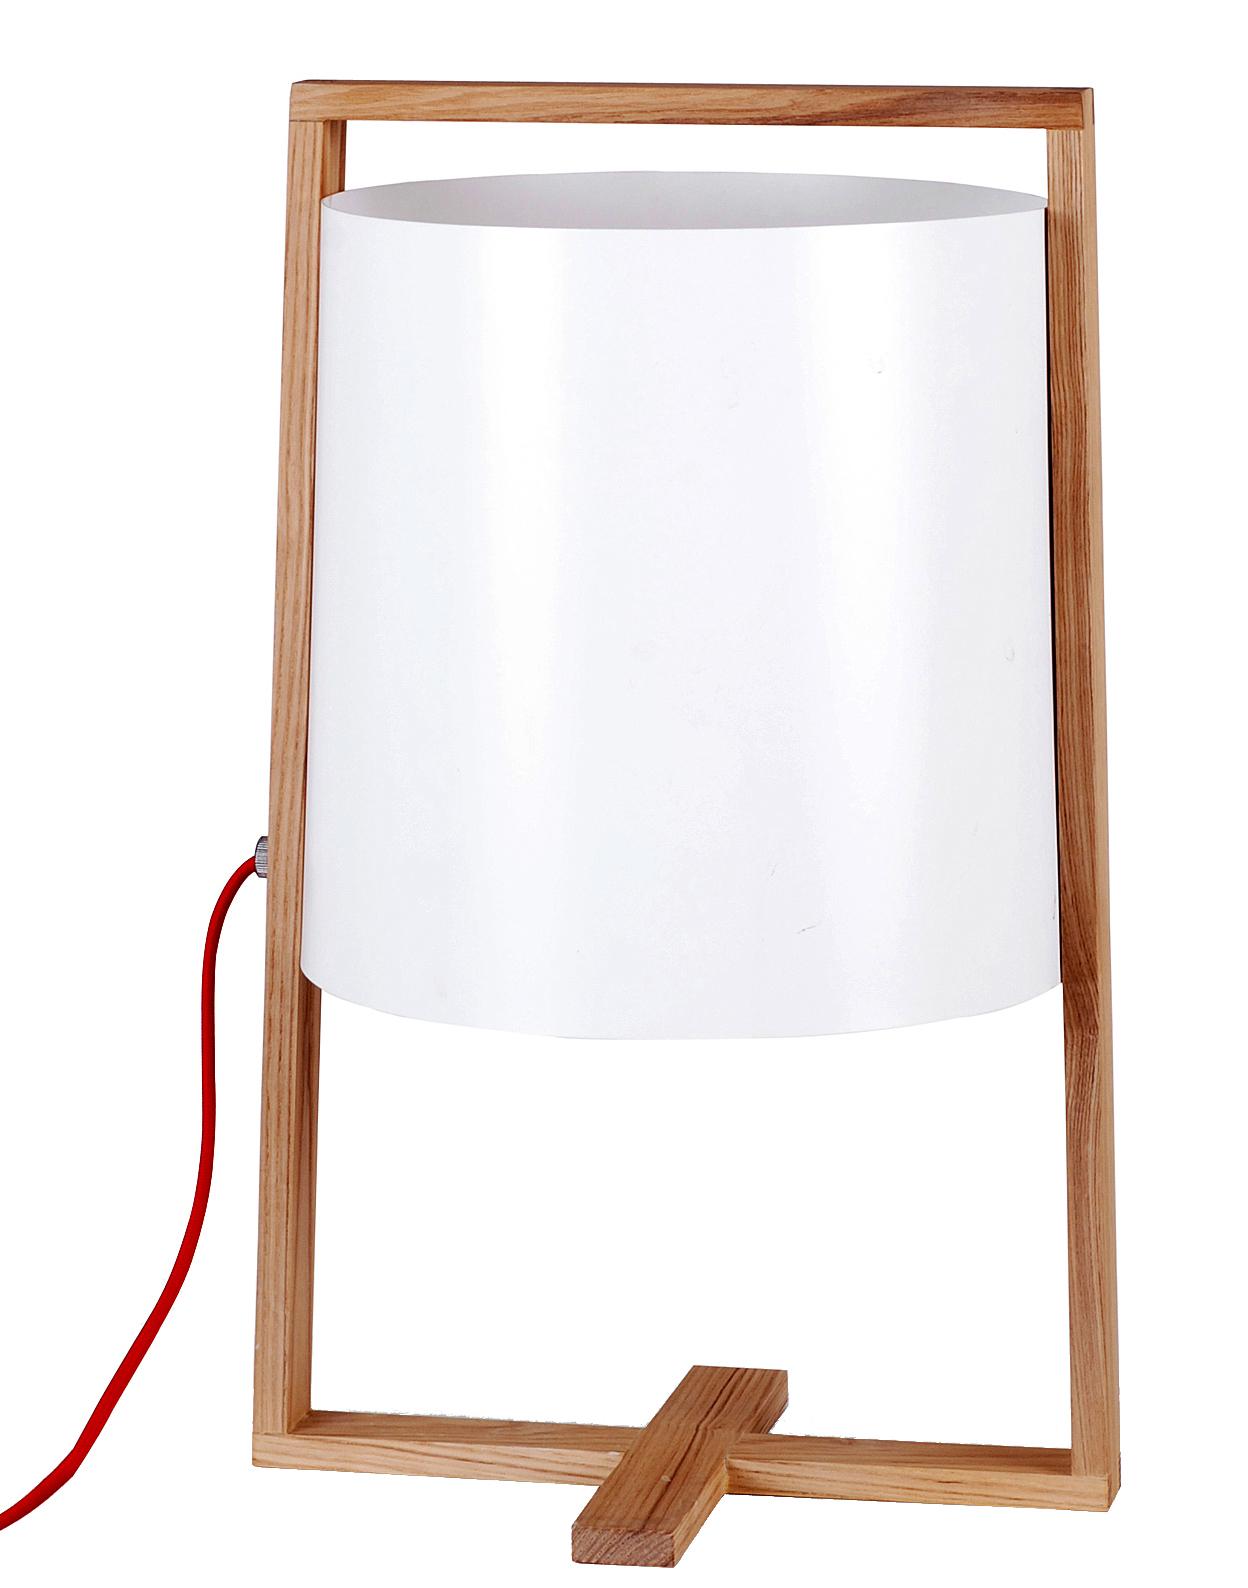 Hot sale modern wood table lamp